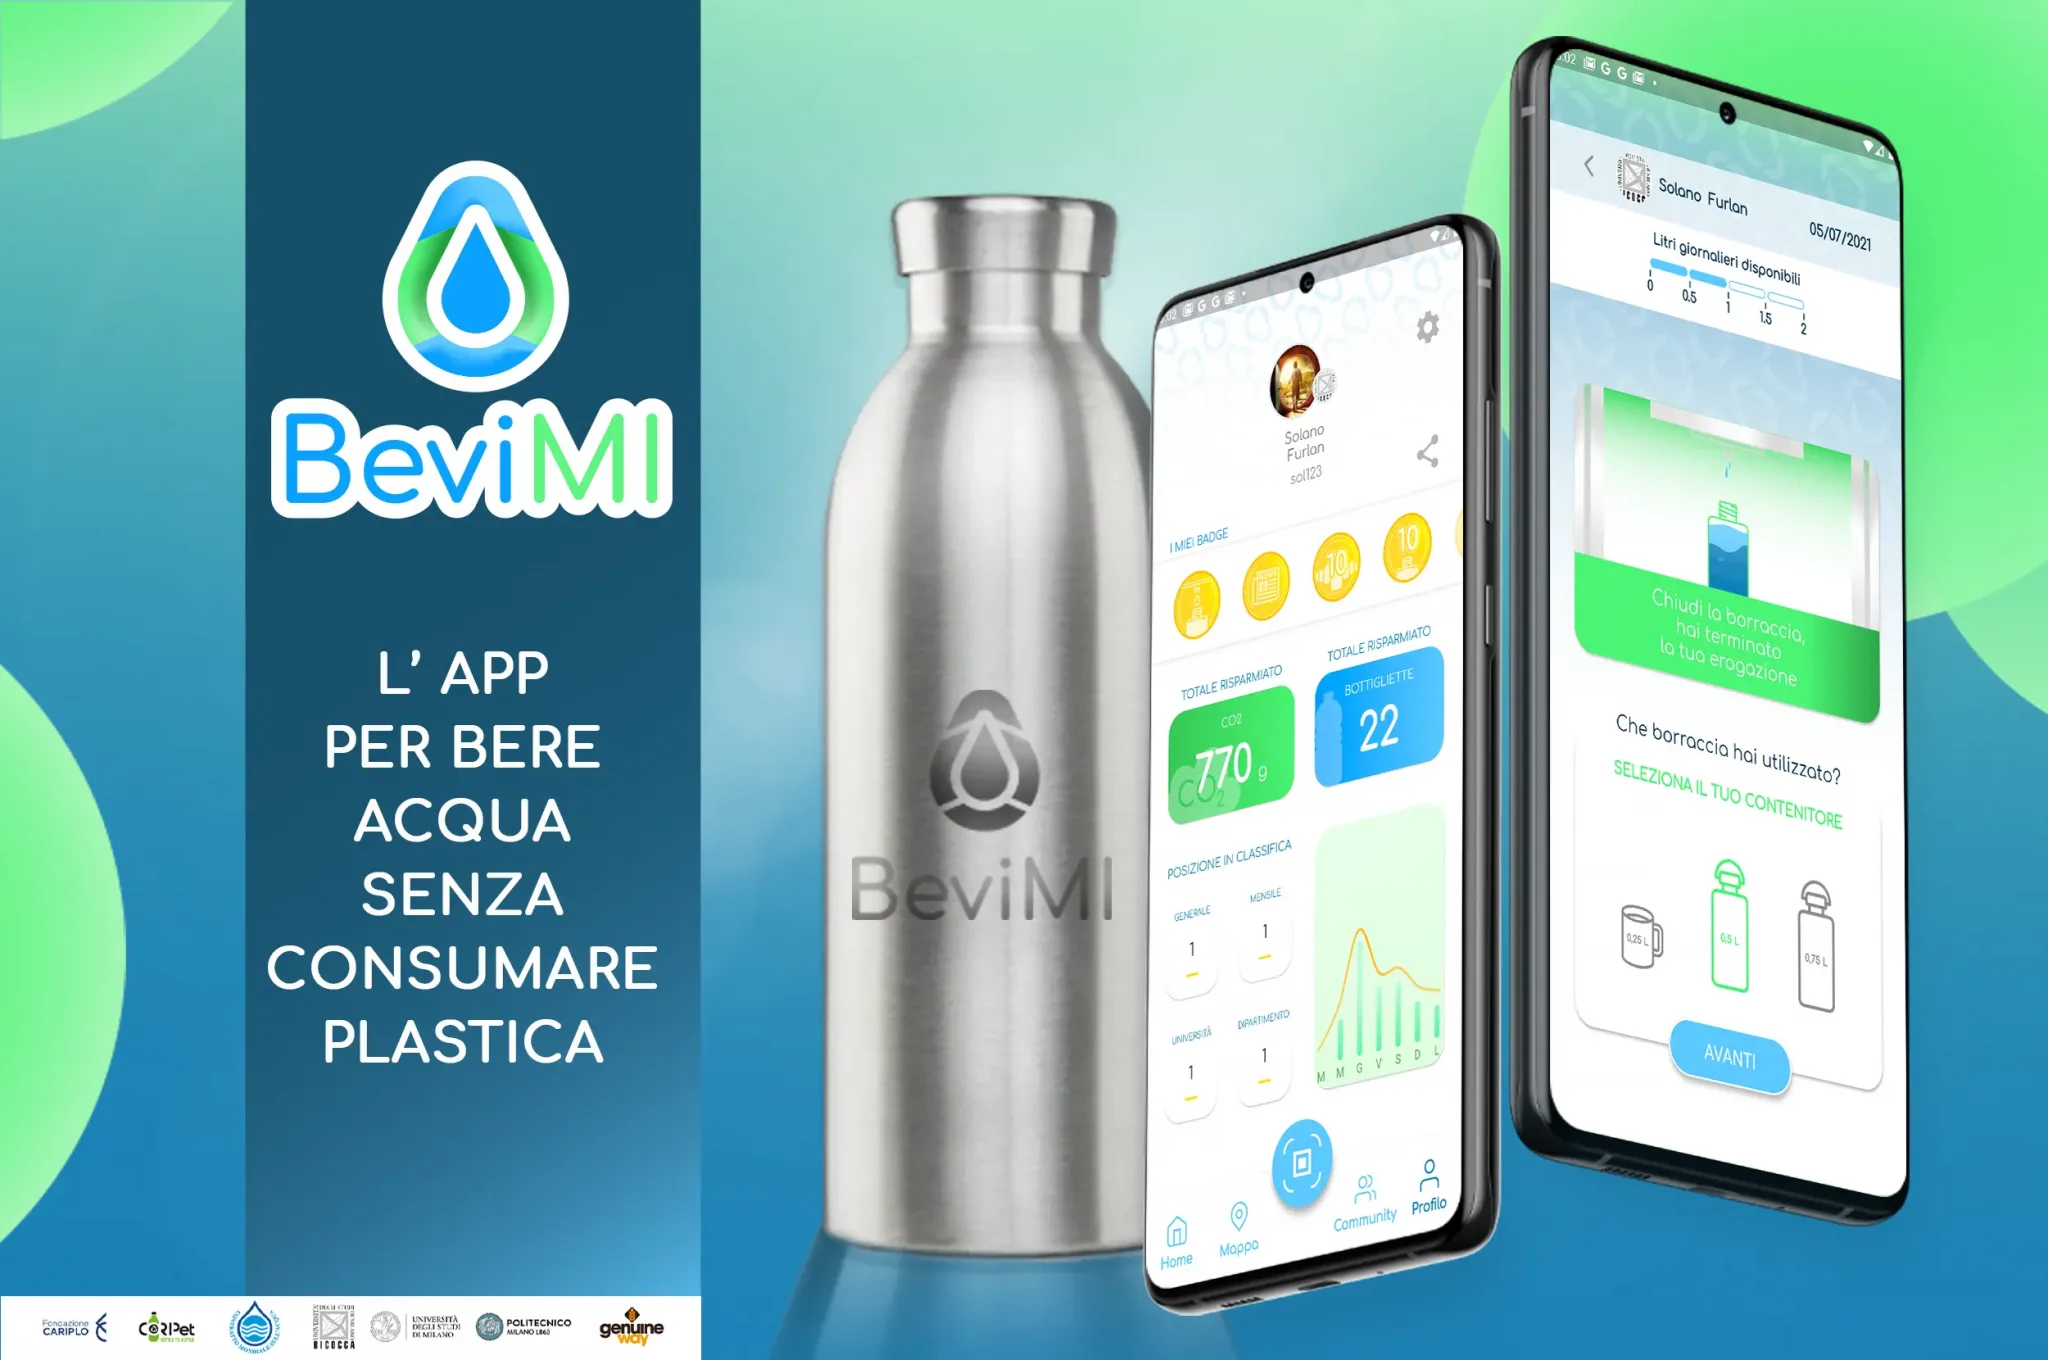 Bevimi App: design for sustainability